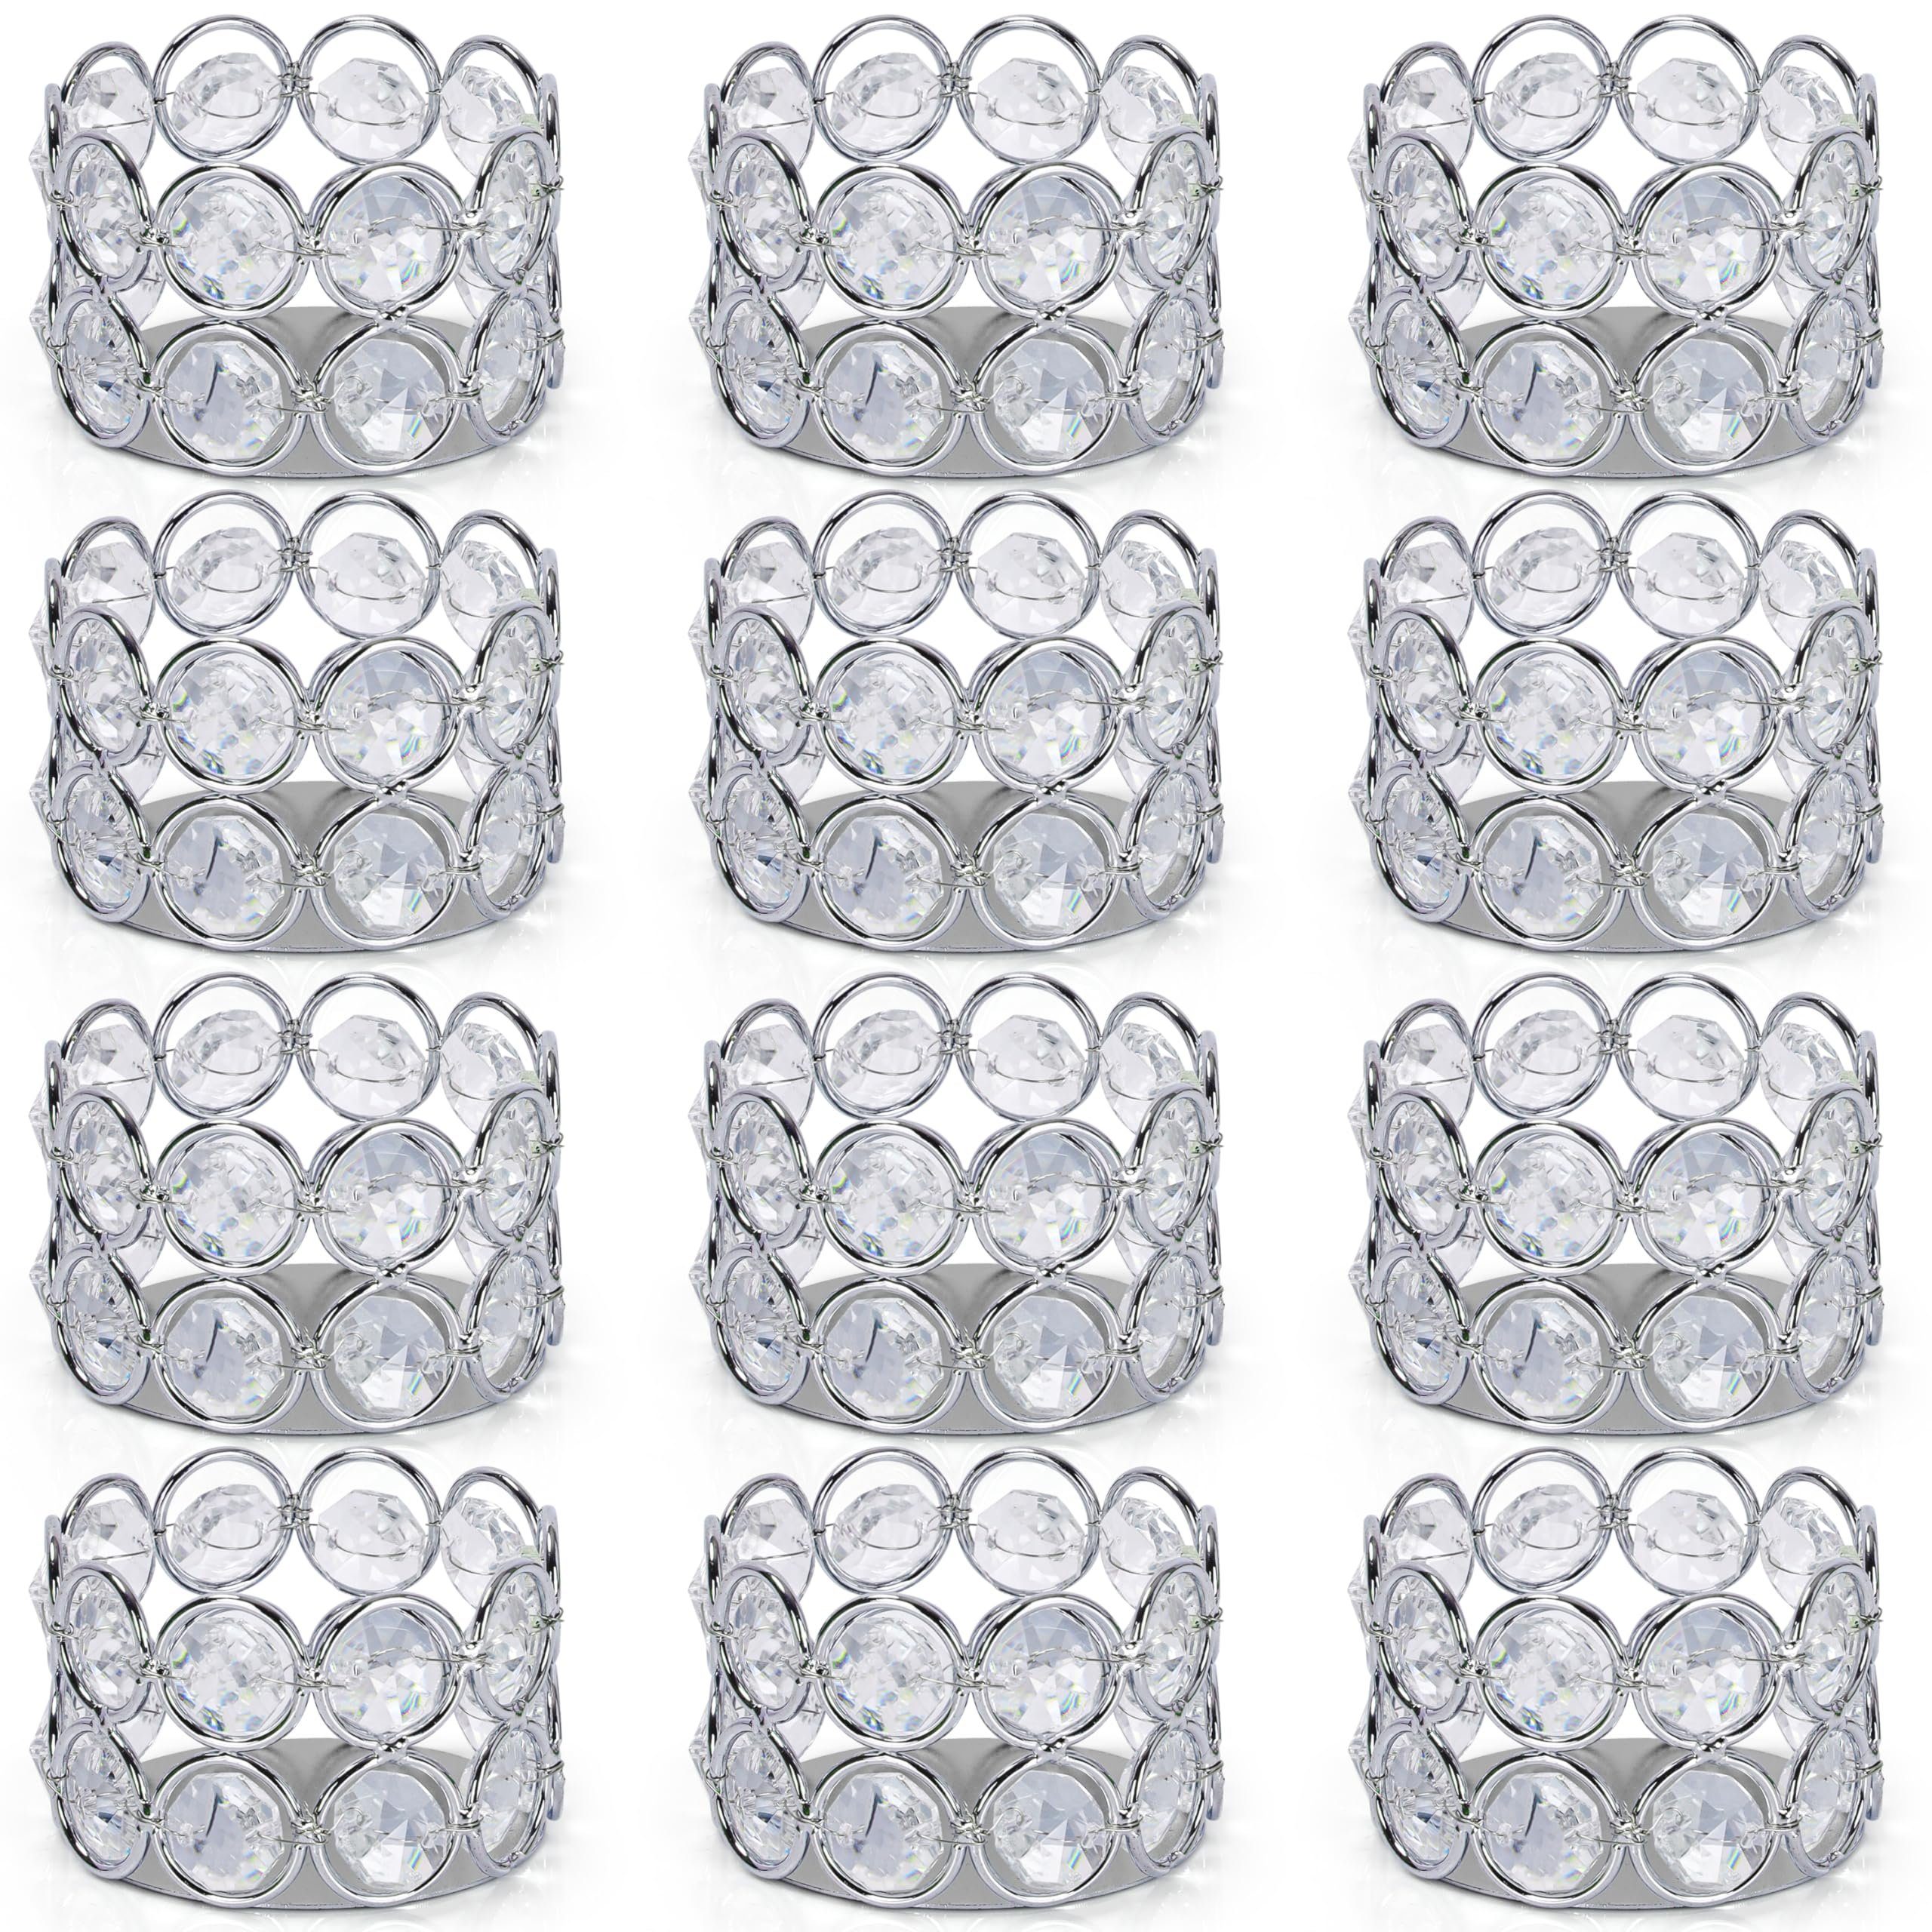 Belle Vous Dekoobjekt Kristall Kerzenständer Set (12 Stück) - Glas Teelichthalter, Silber Kristall Kerzenständer (12 Stk) - Teelichthalter Glas